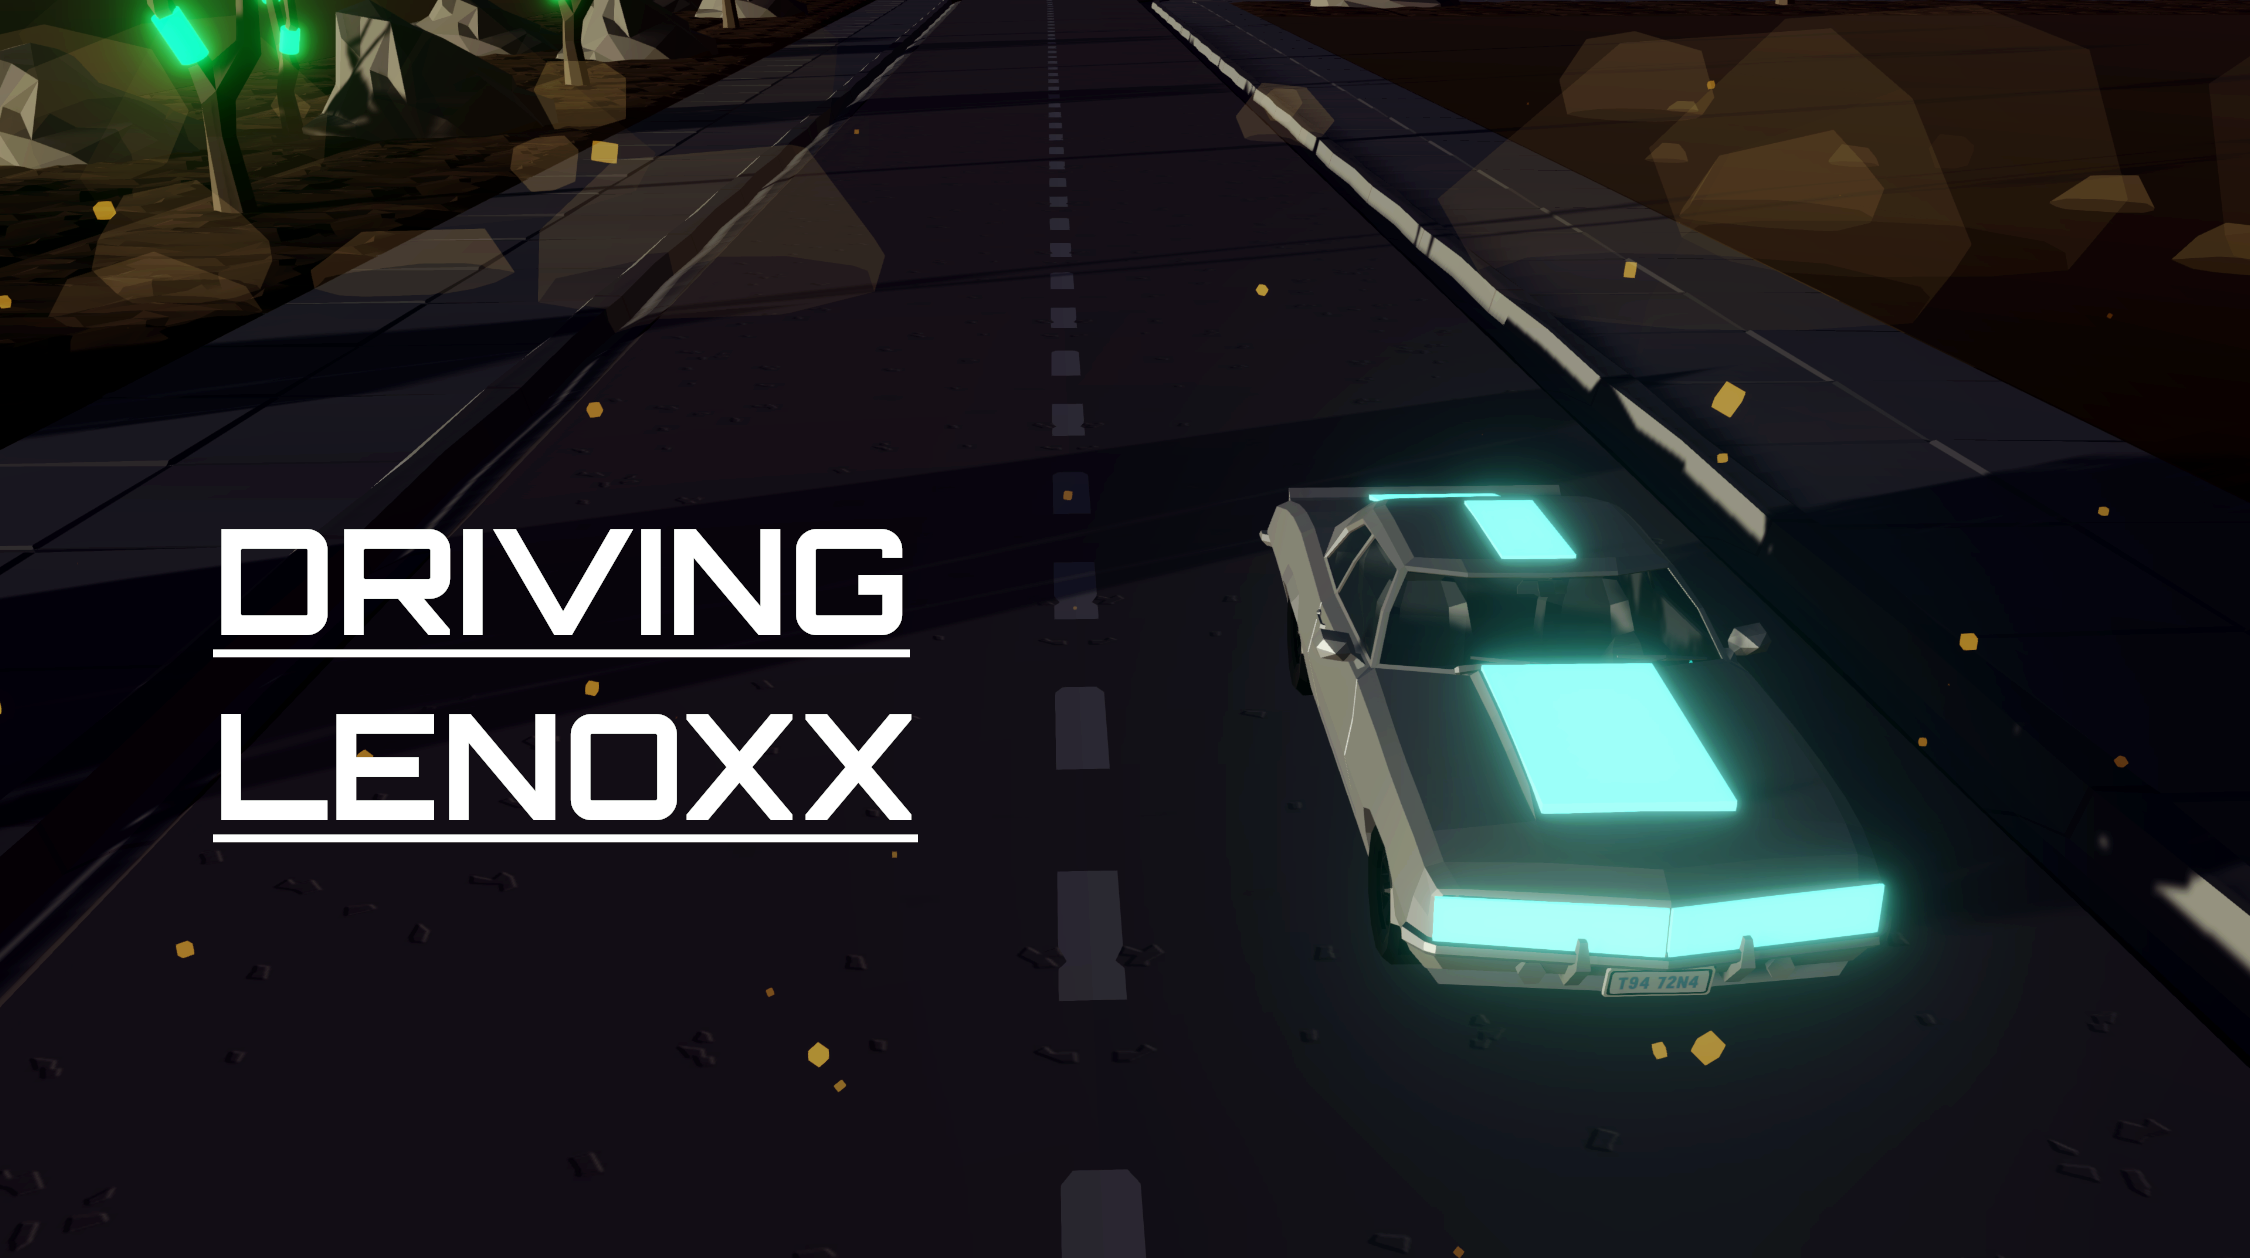 Driving LENOXX